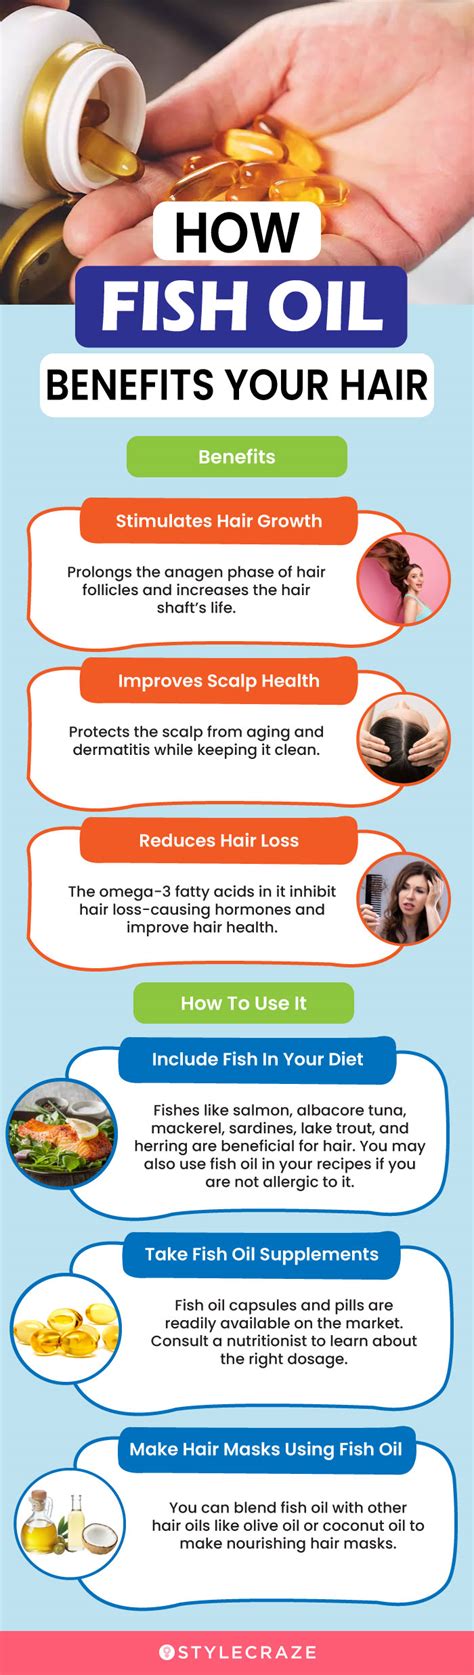 Fish oils preventing hair loss